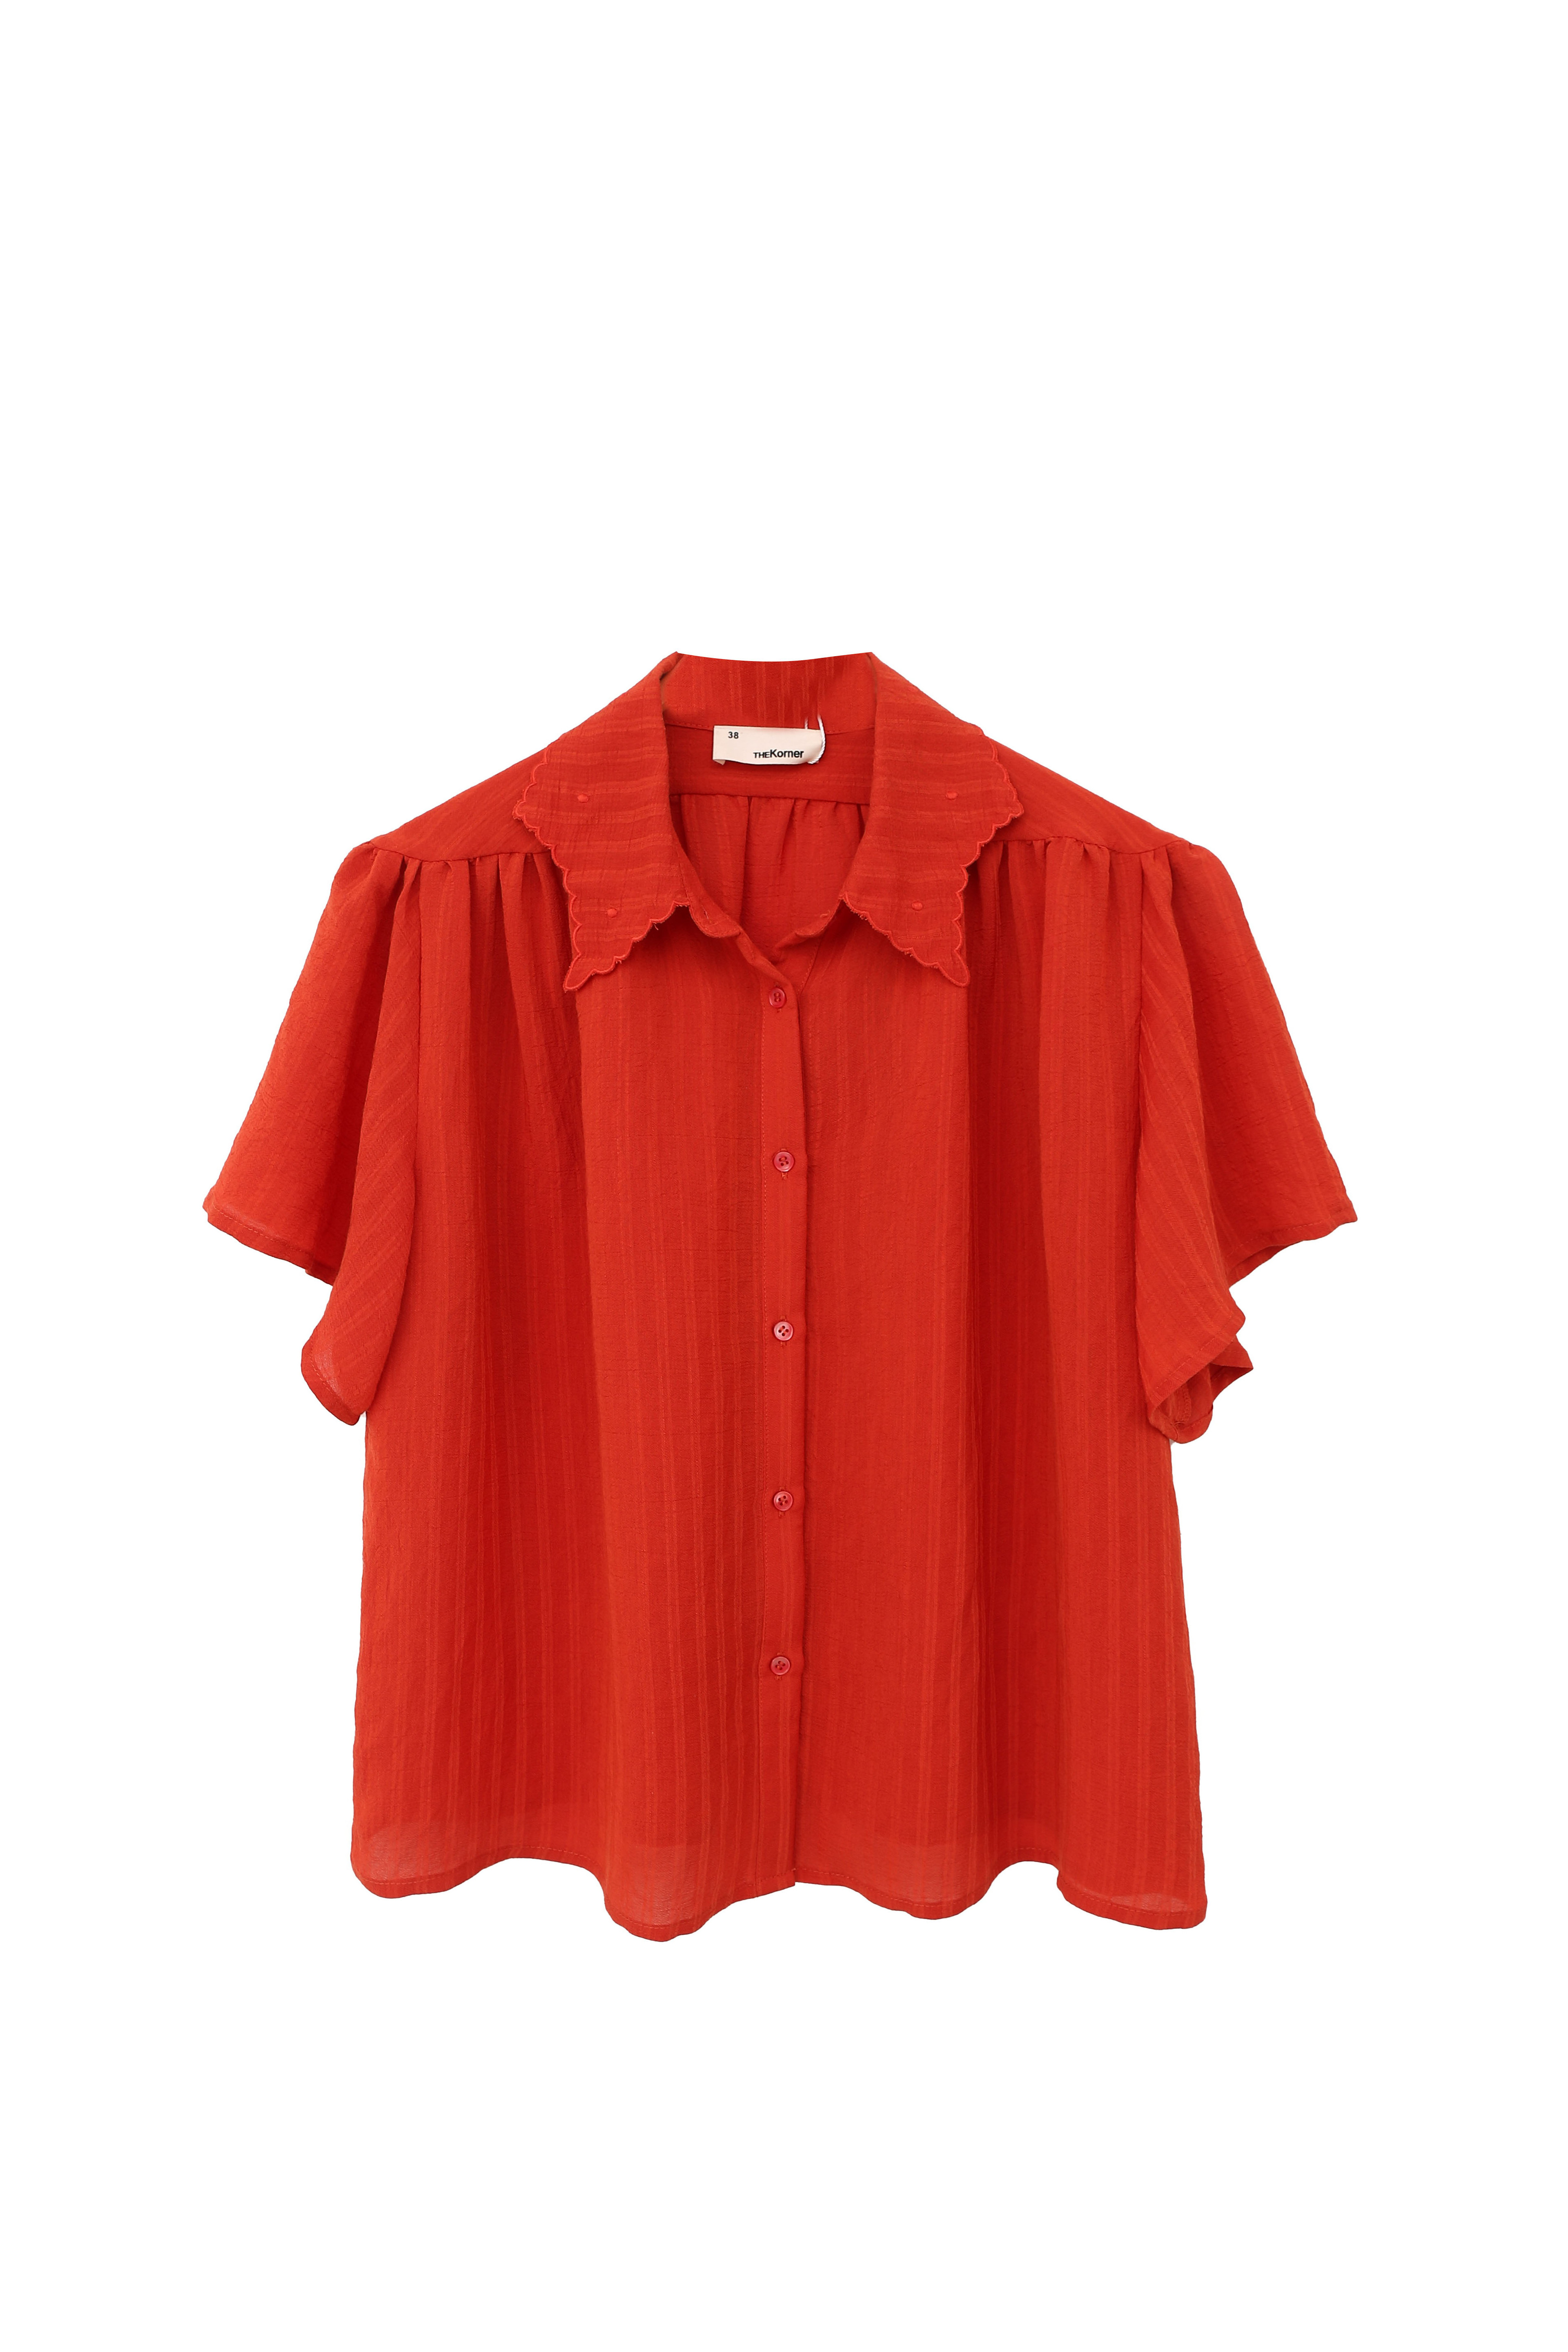 the-korner-brick-embroidery-short-sleeve-collar-shirt